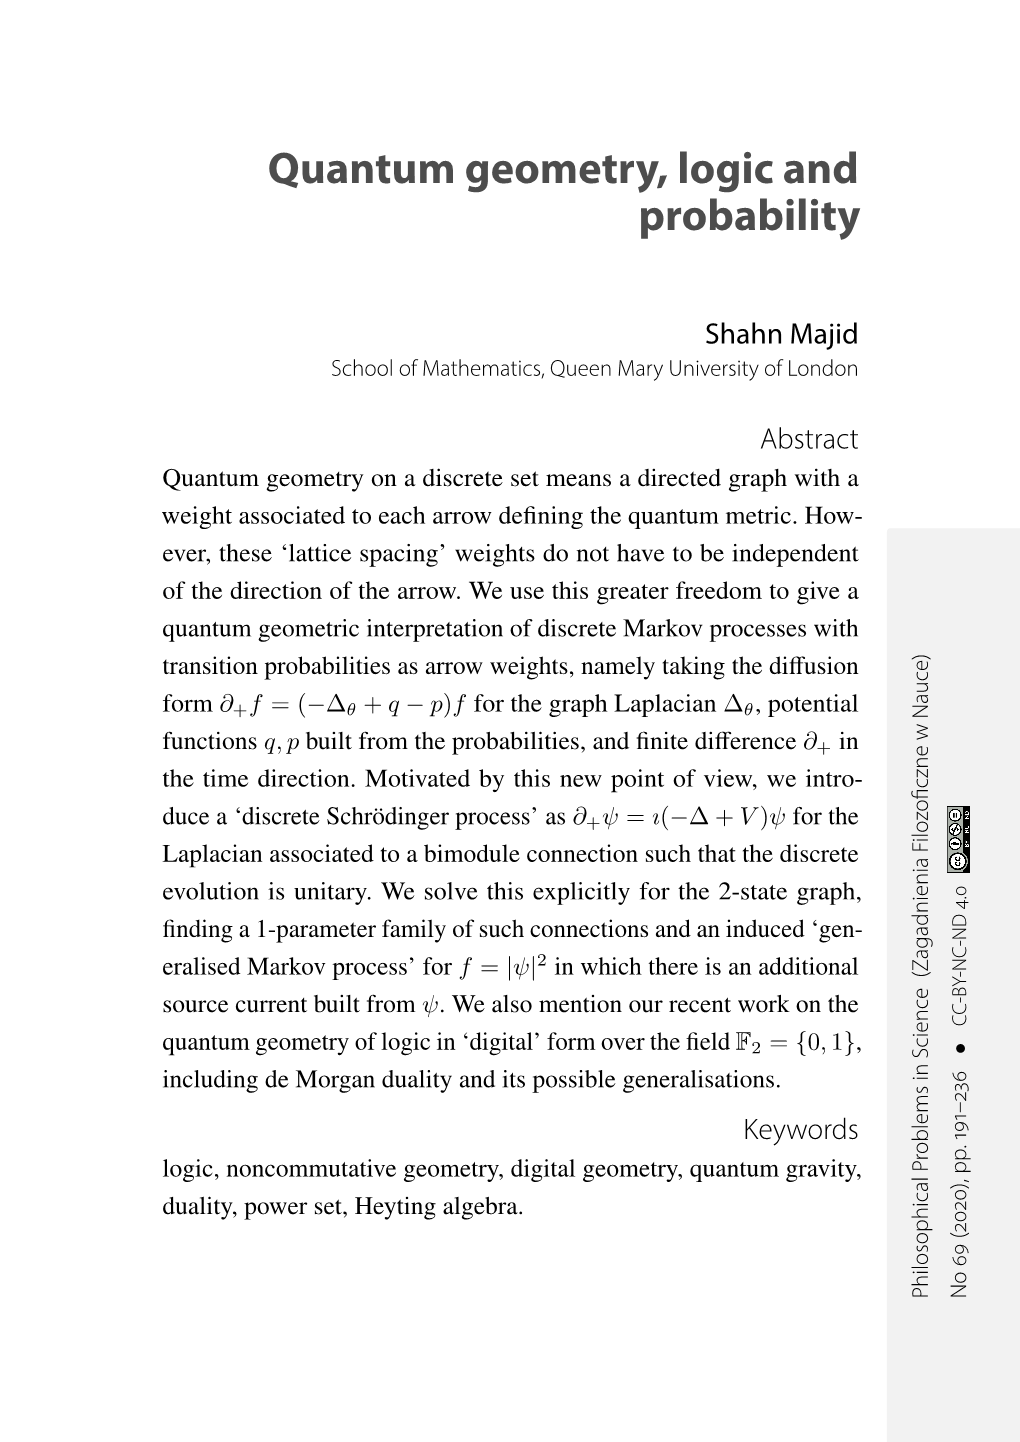 Quantum Geometry, Logic and Probability